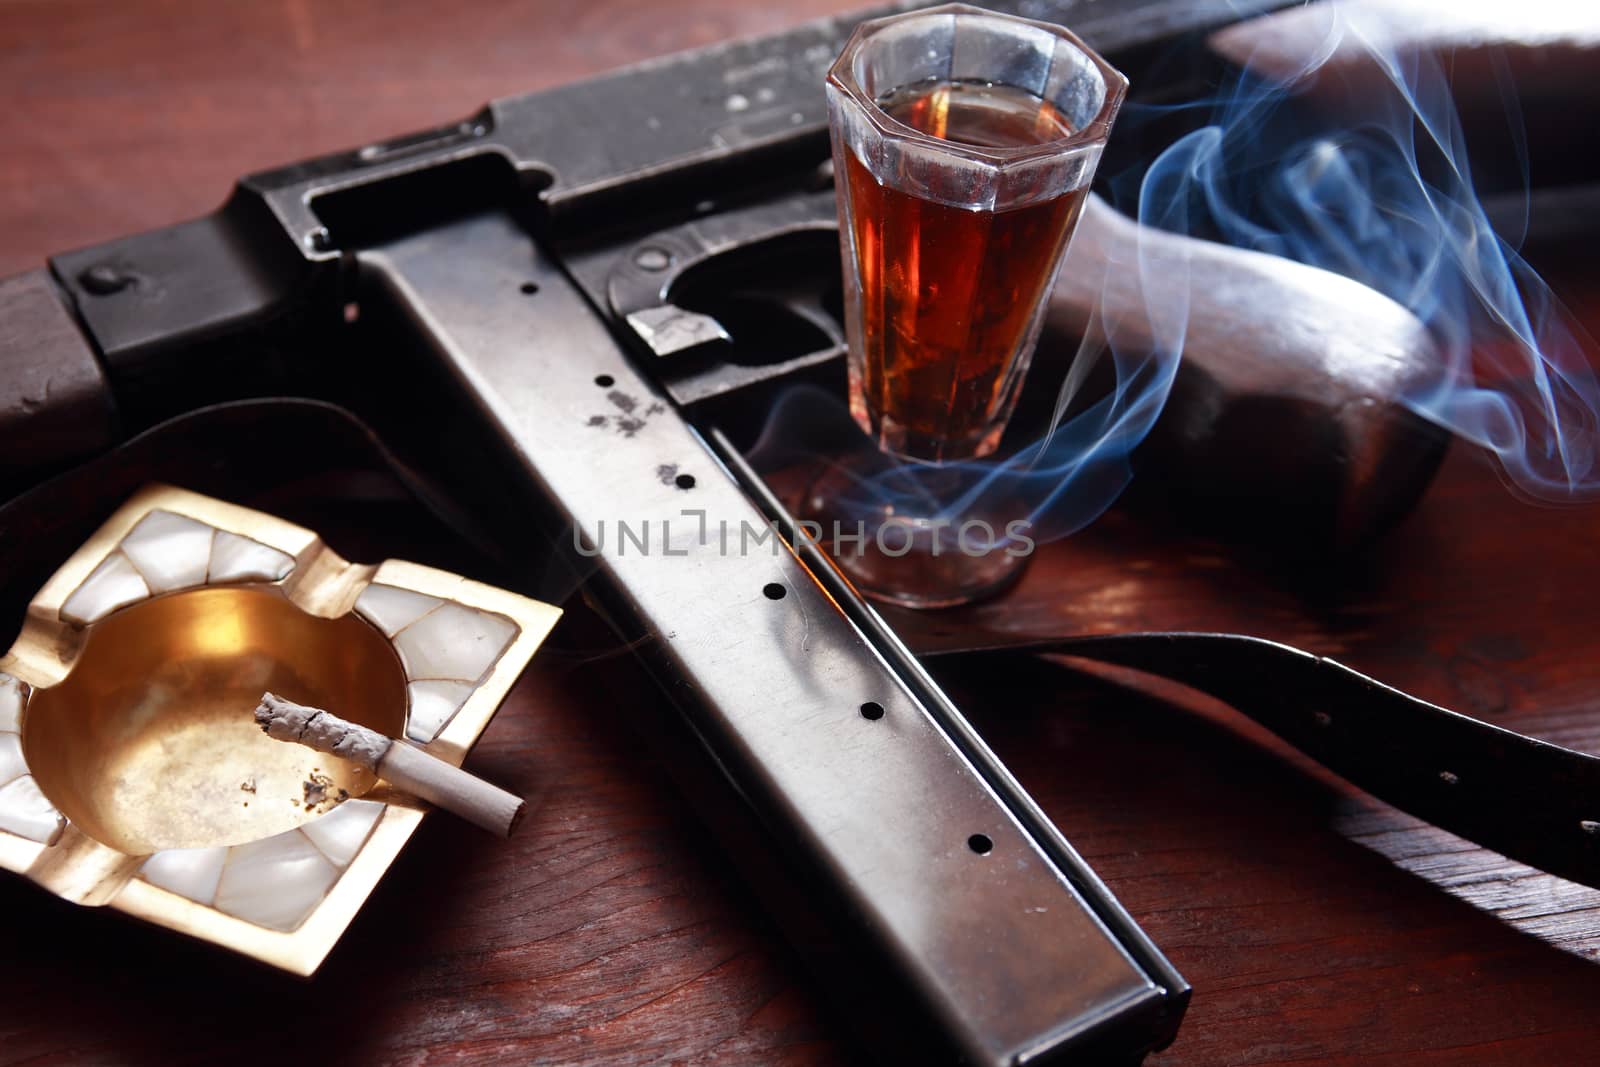 Prohabitation concept. Old USA submachine gun near drink and cigarette